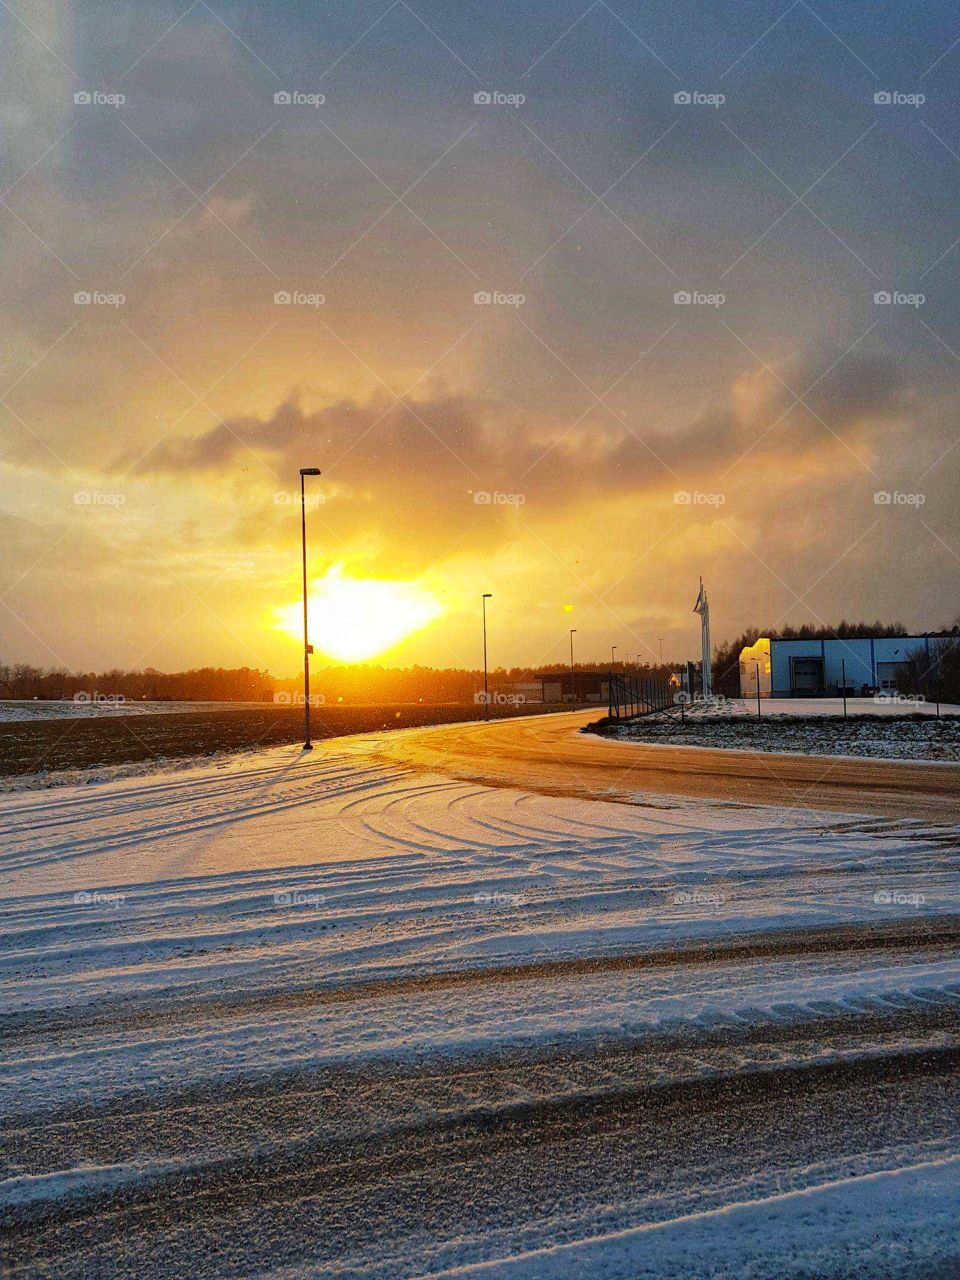 Snow and sun